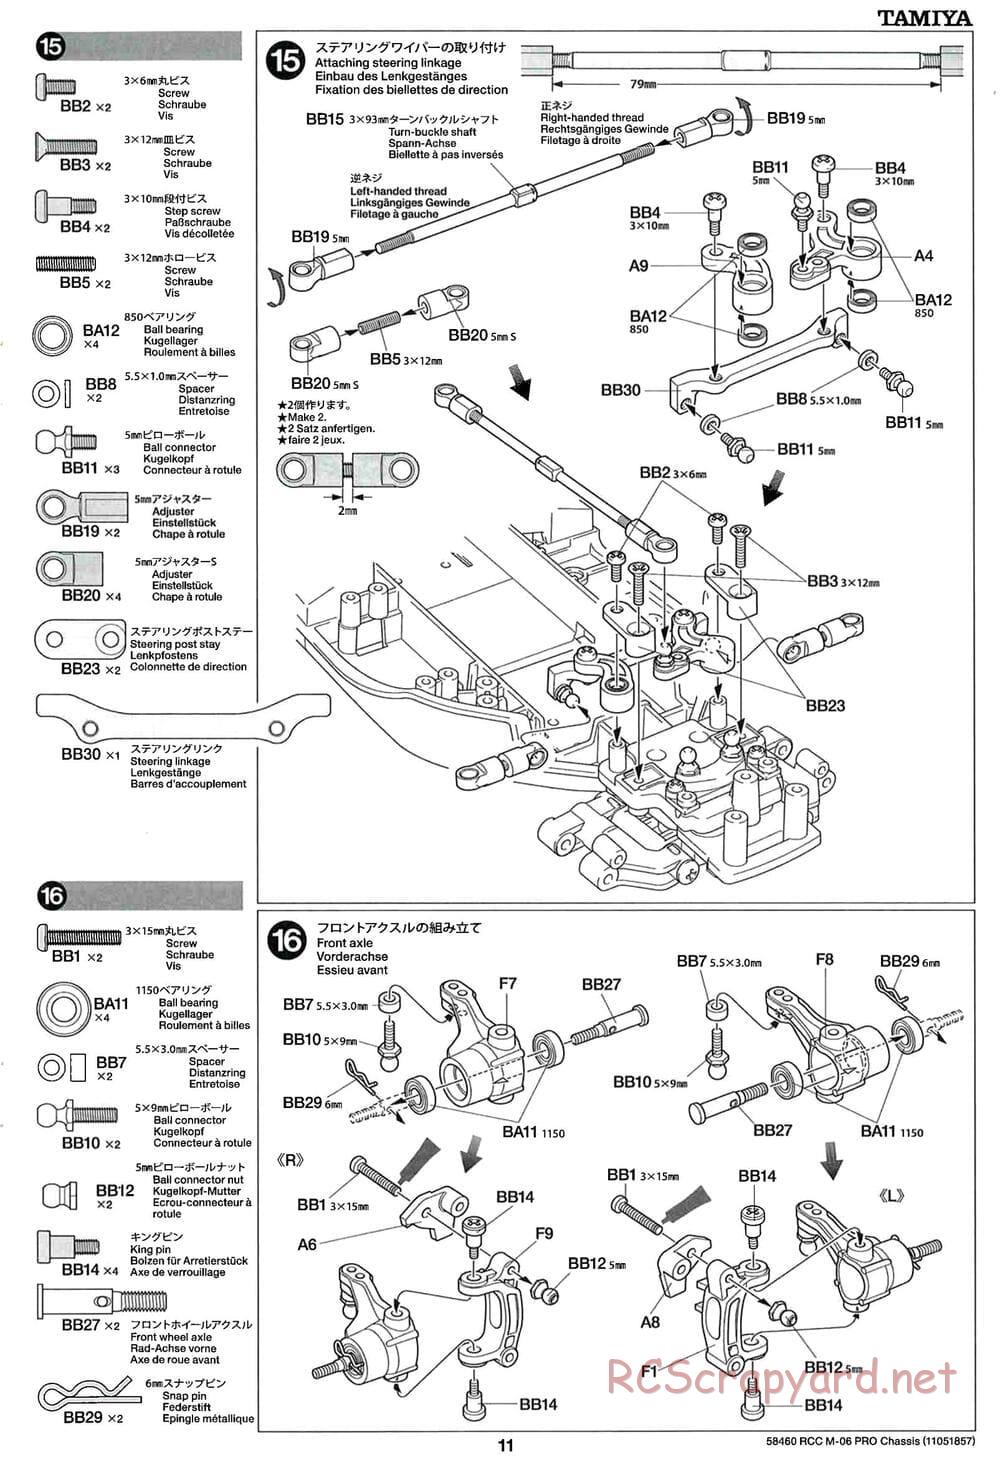 Tamiya - M-06 Pro Chassis - Manual - Page 11